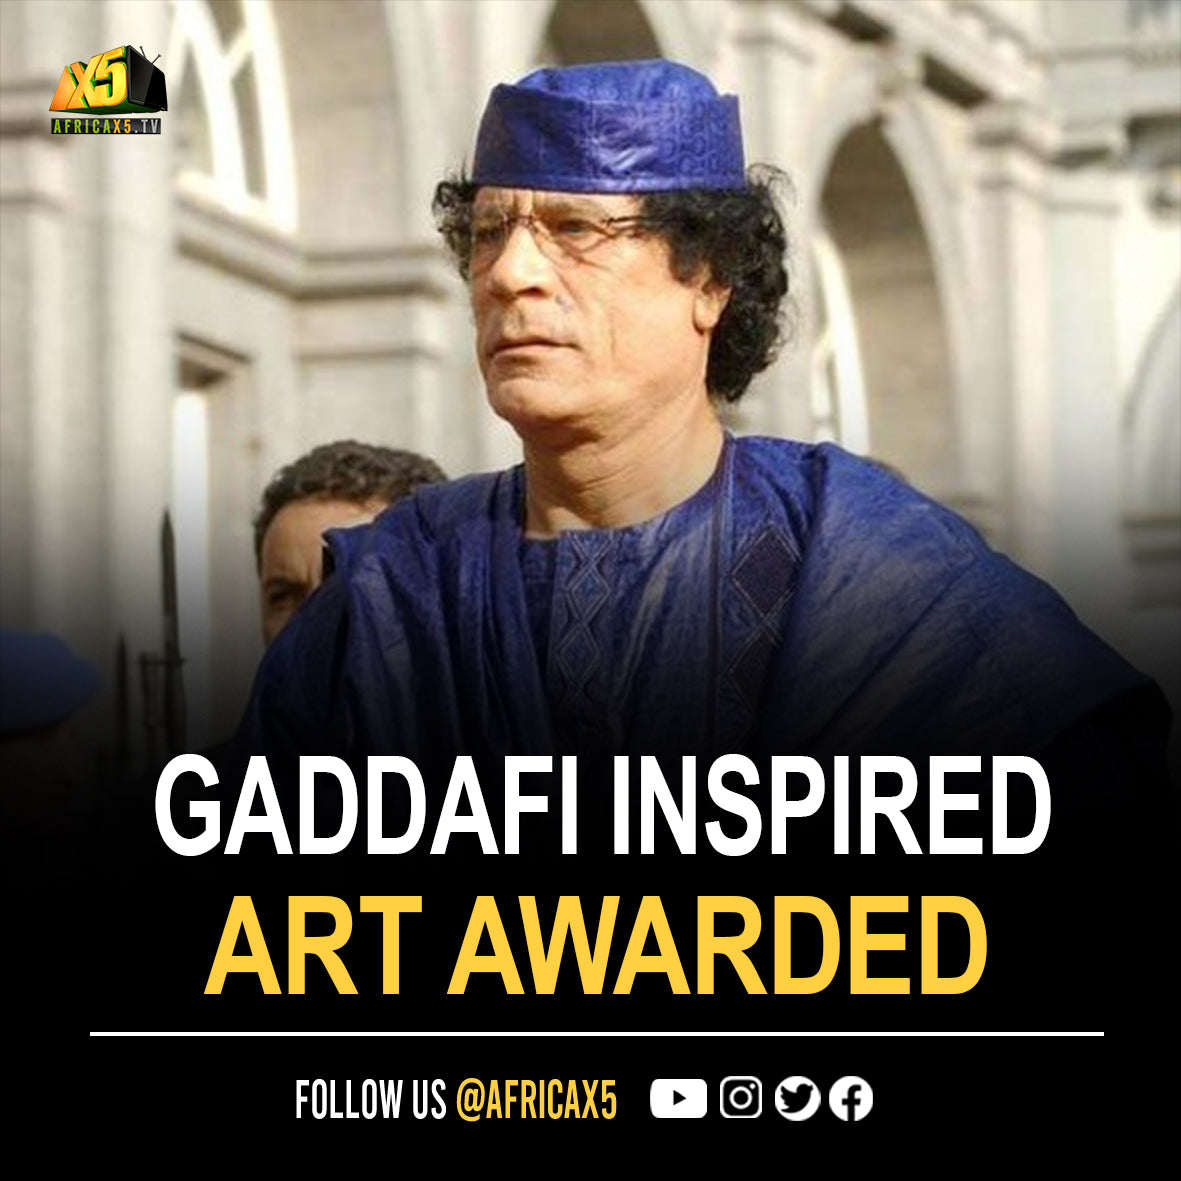 Gaddafi-inspired art awarded in Italy